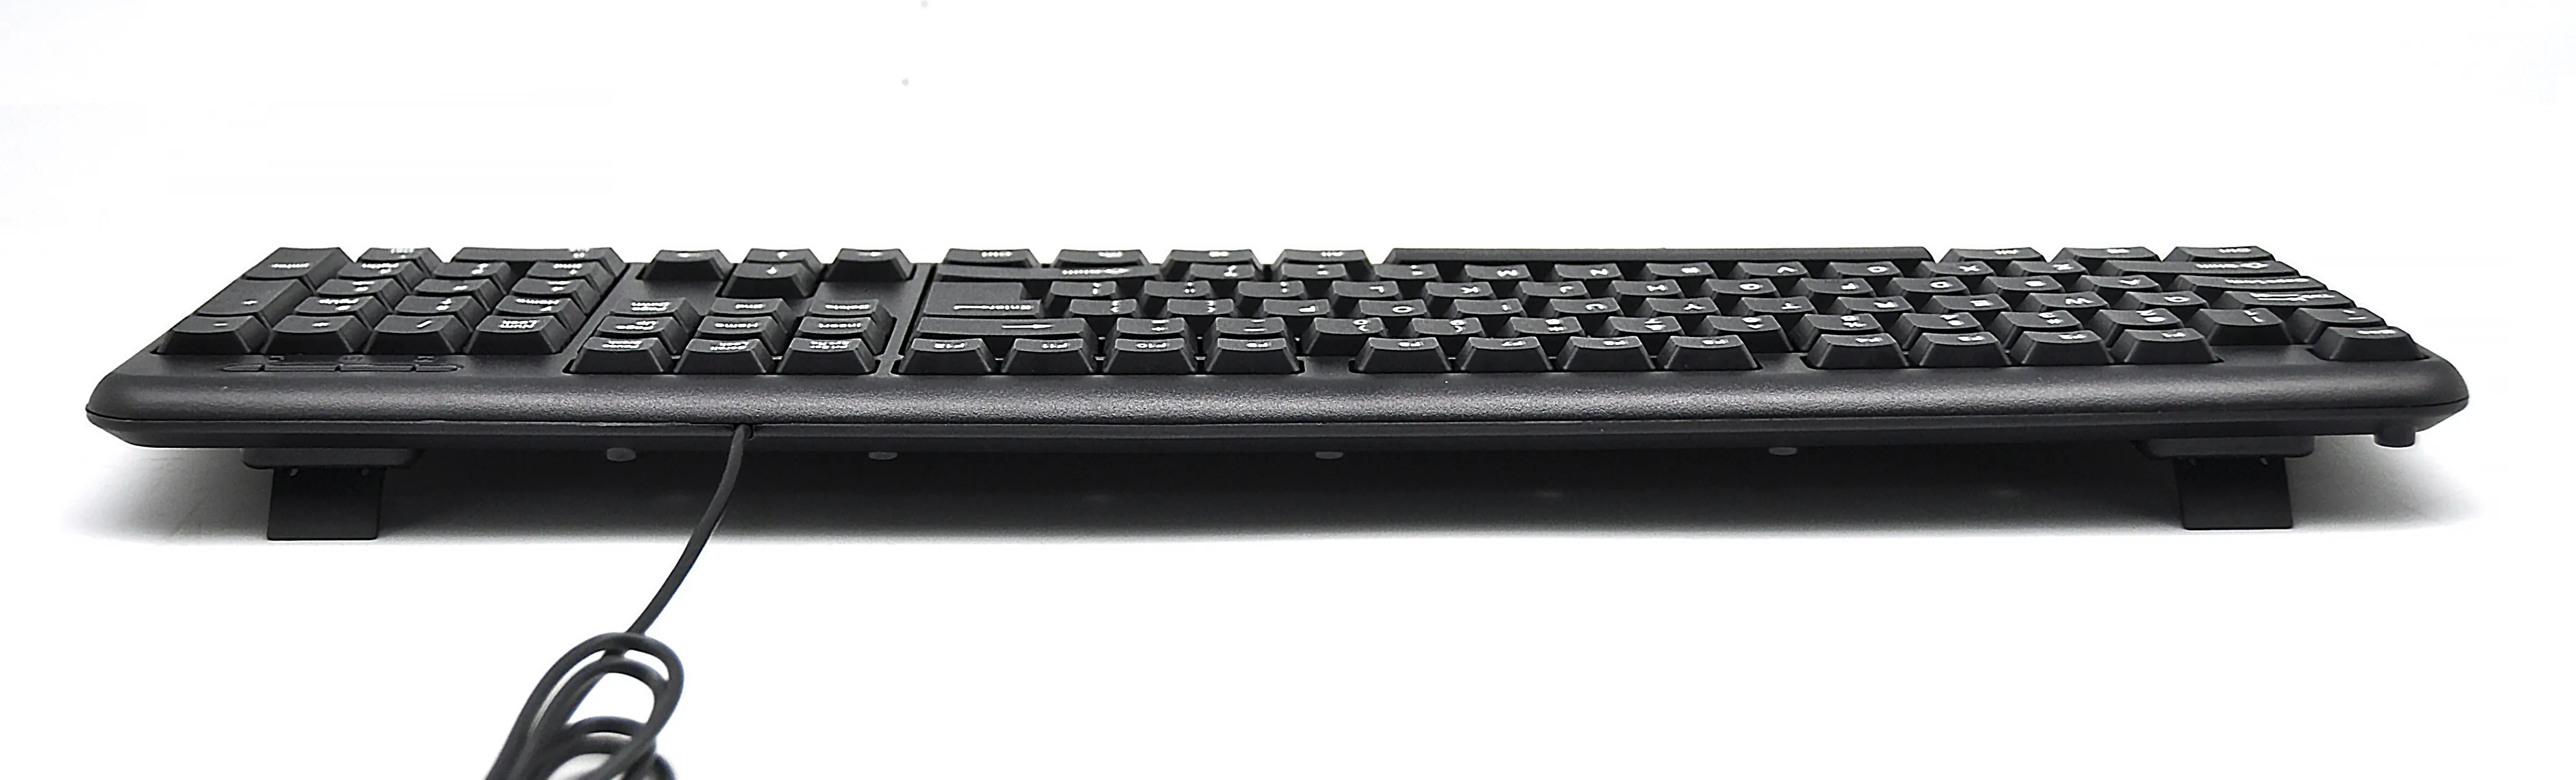 Kantor Kabel Keyboard KB251 Tanpa Cahaya Ukuran Ultra Thin Multimedia Keyboard Digunakan untuk Rumah Kantor